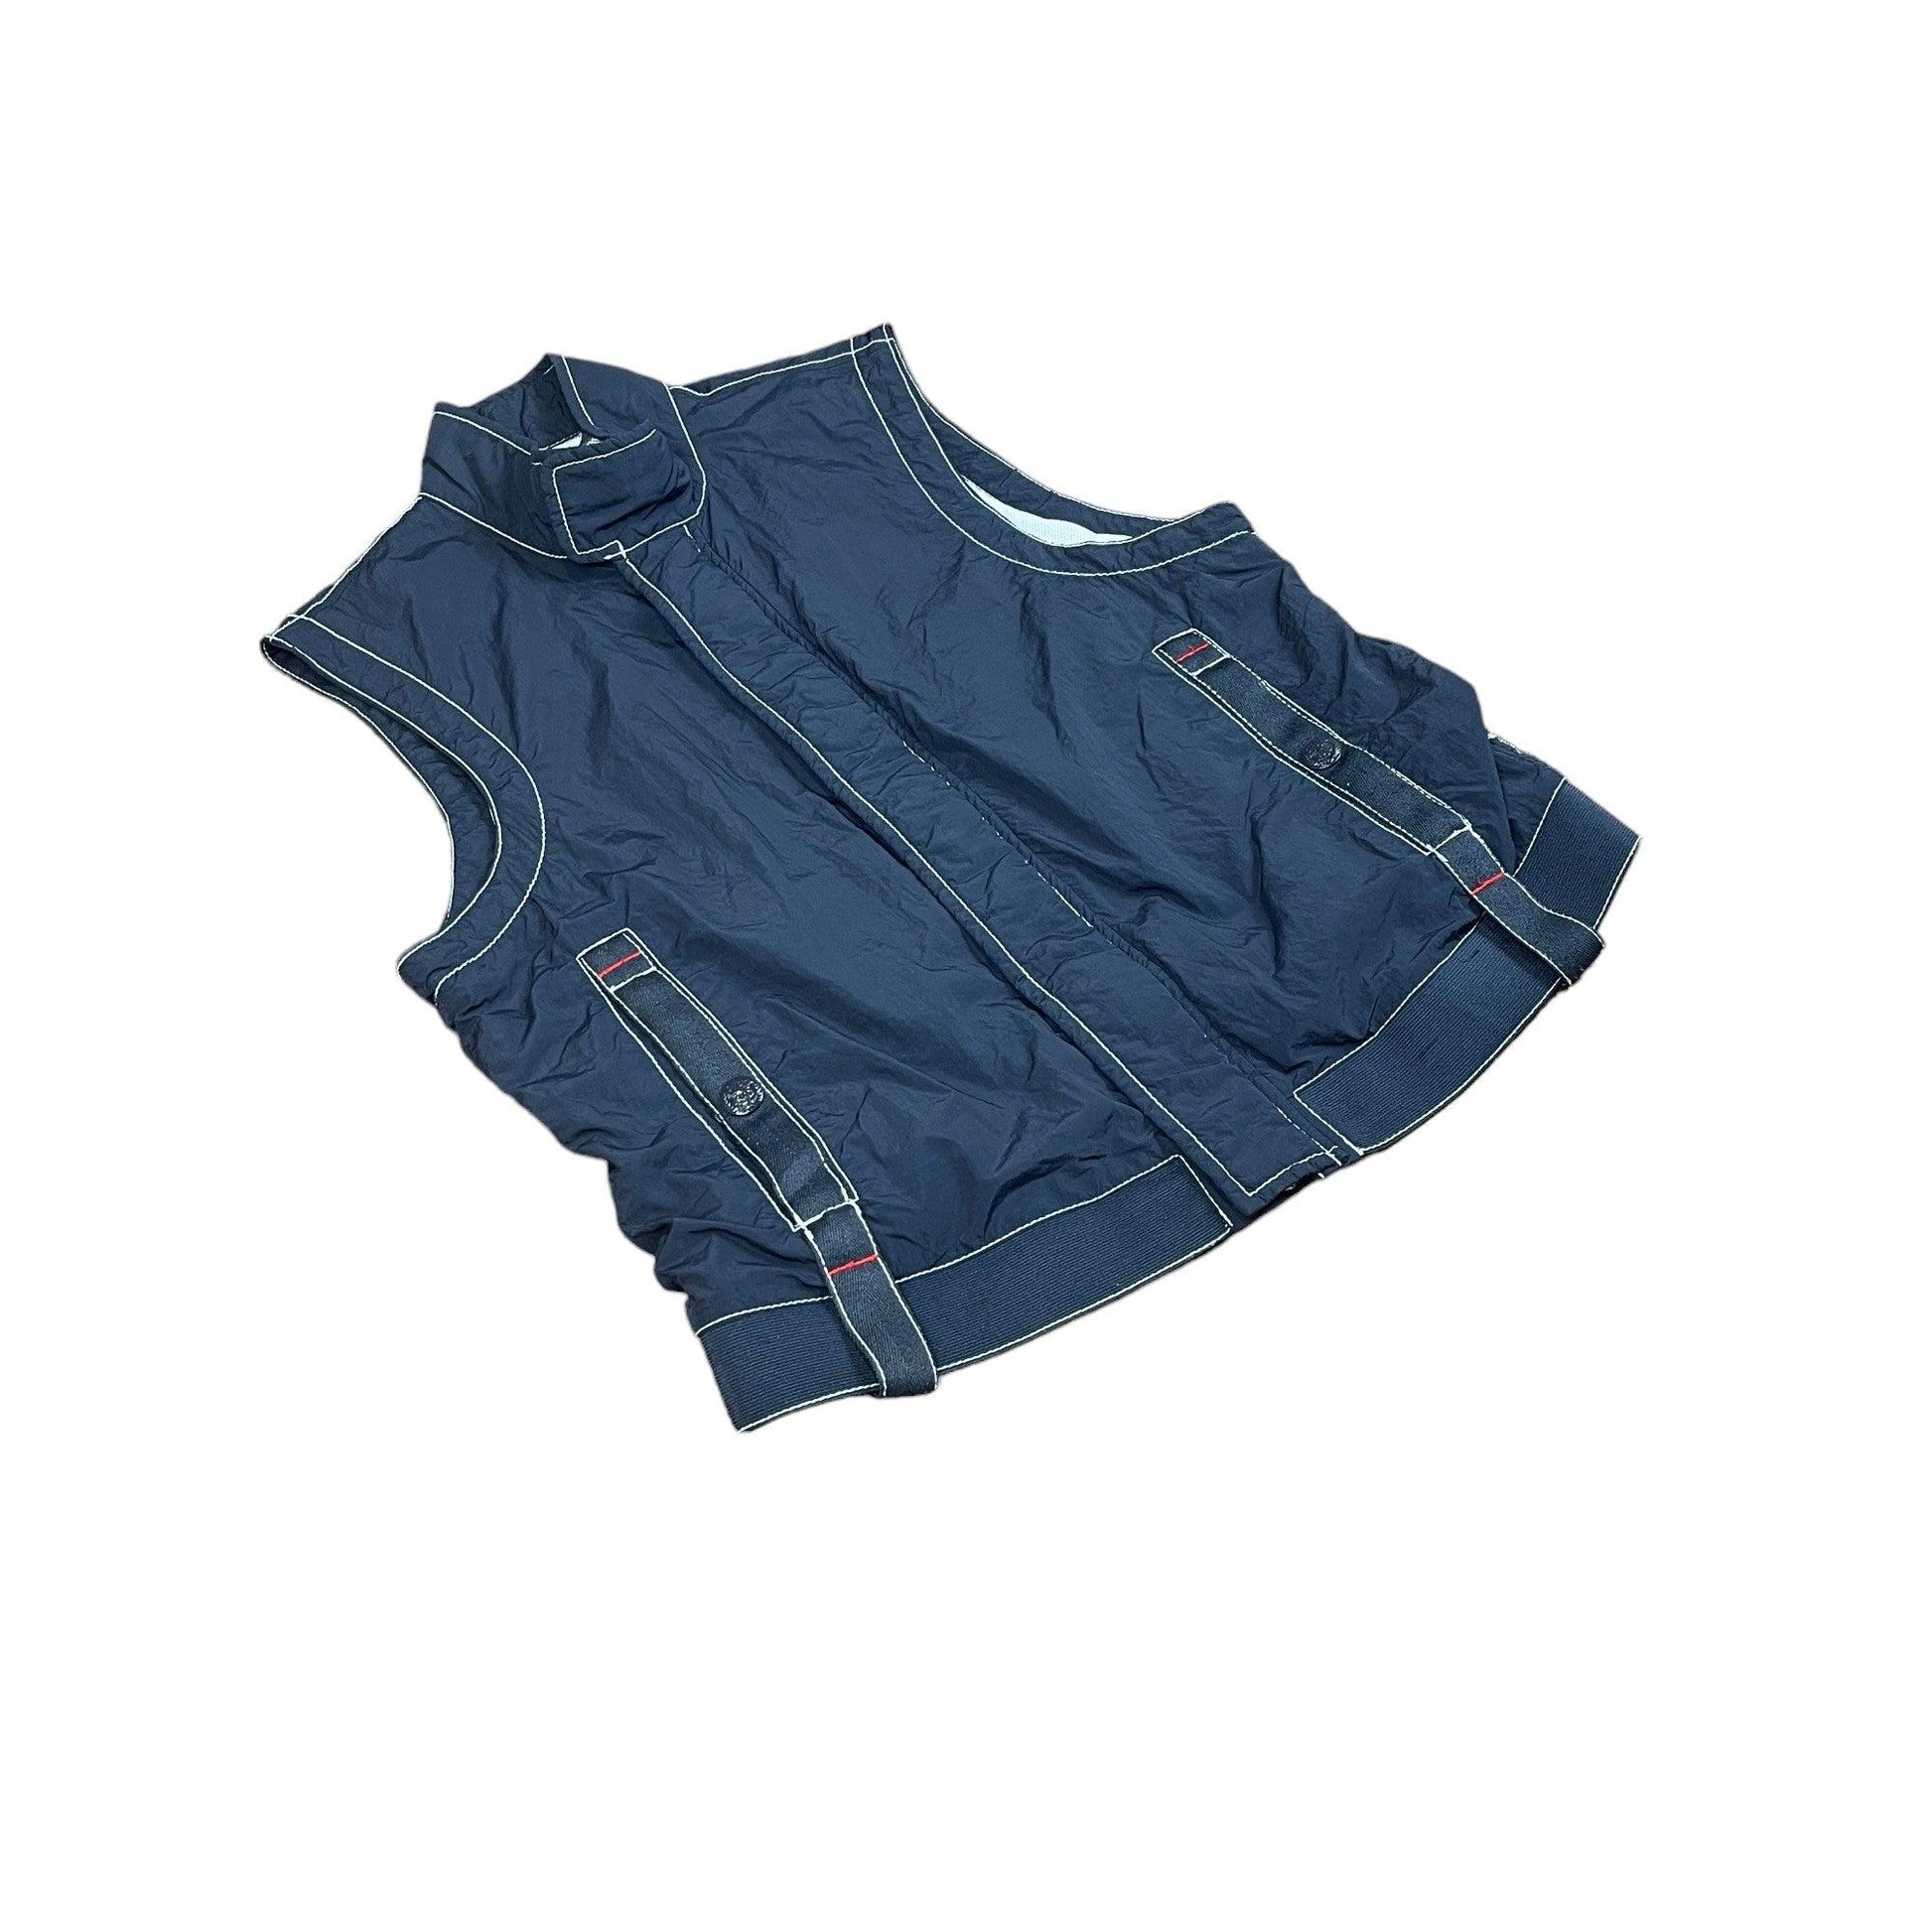 Vintage Navy Blue Armani Jeans Gilet - Medium - The Streetwear Studio